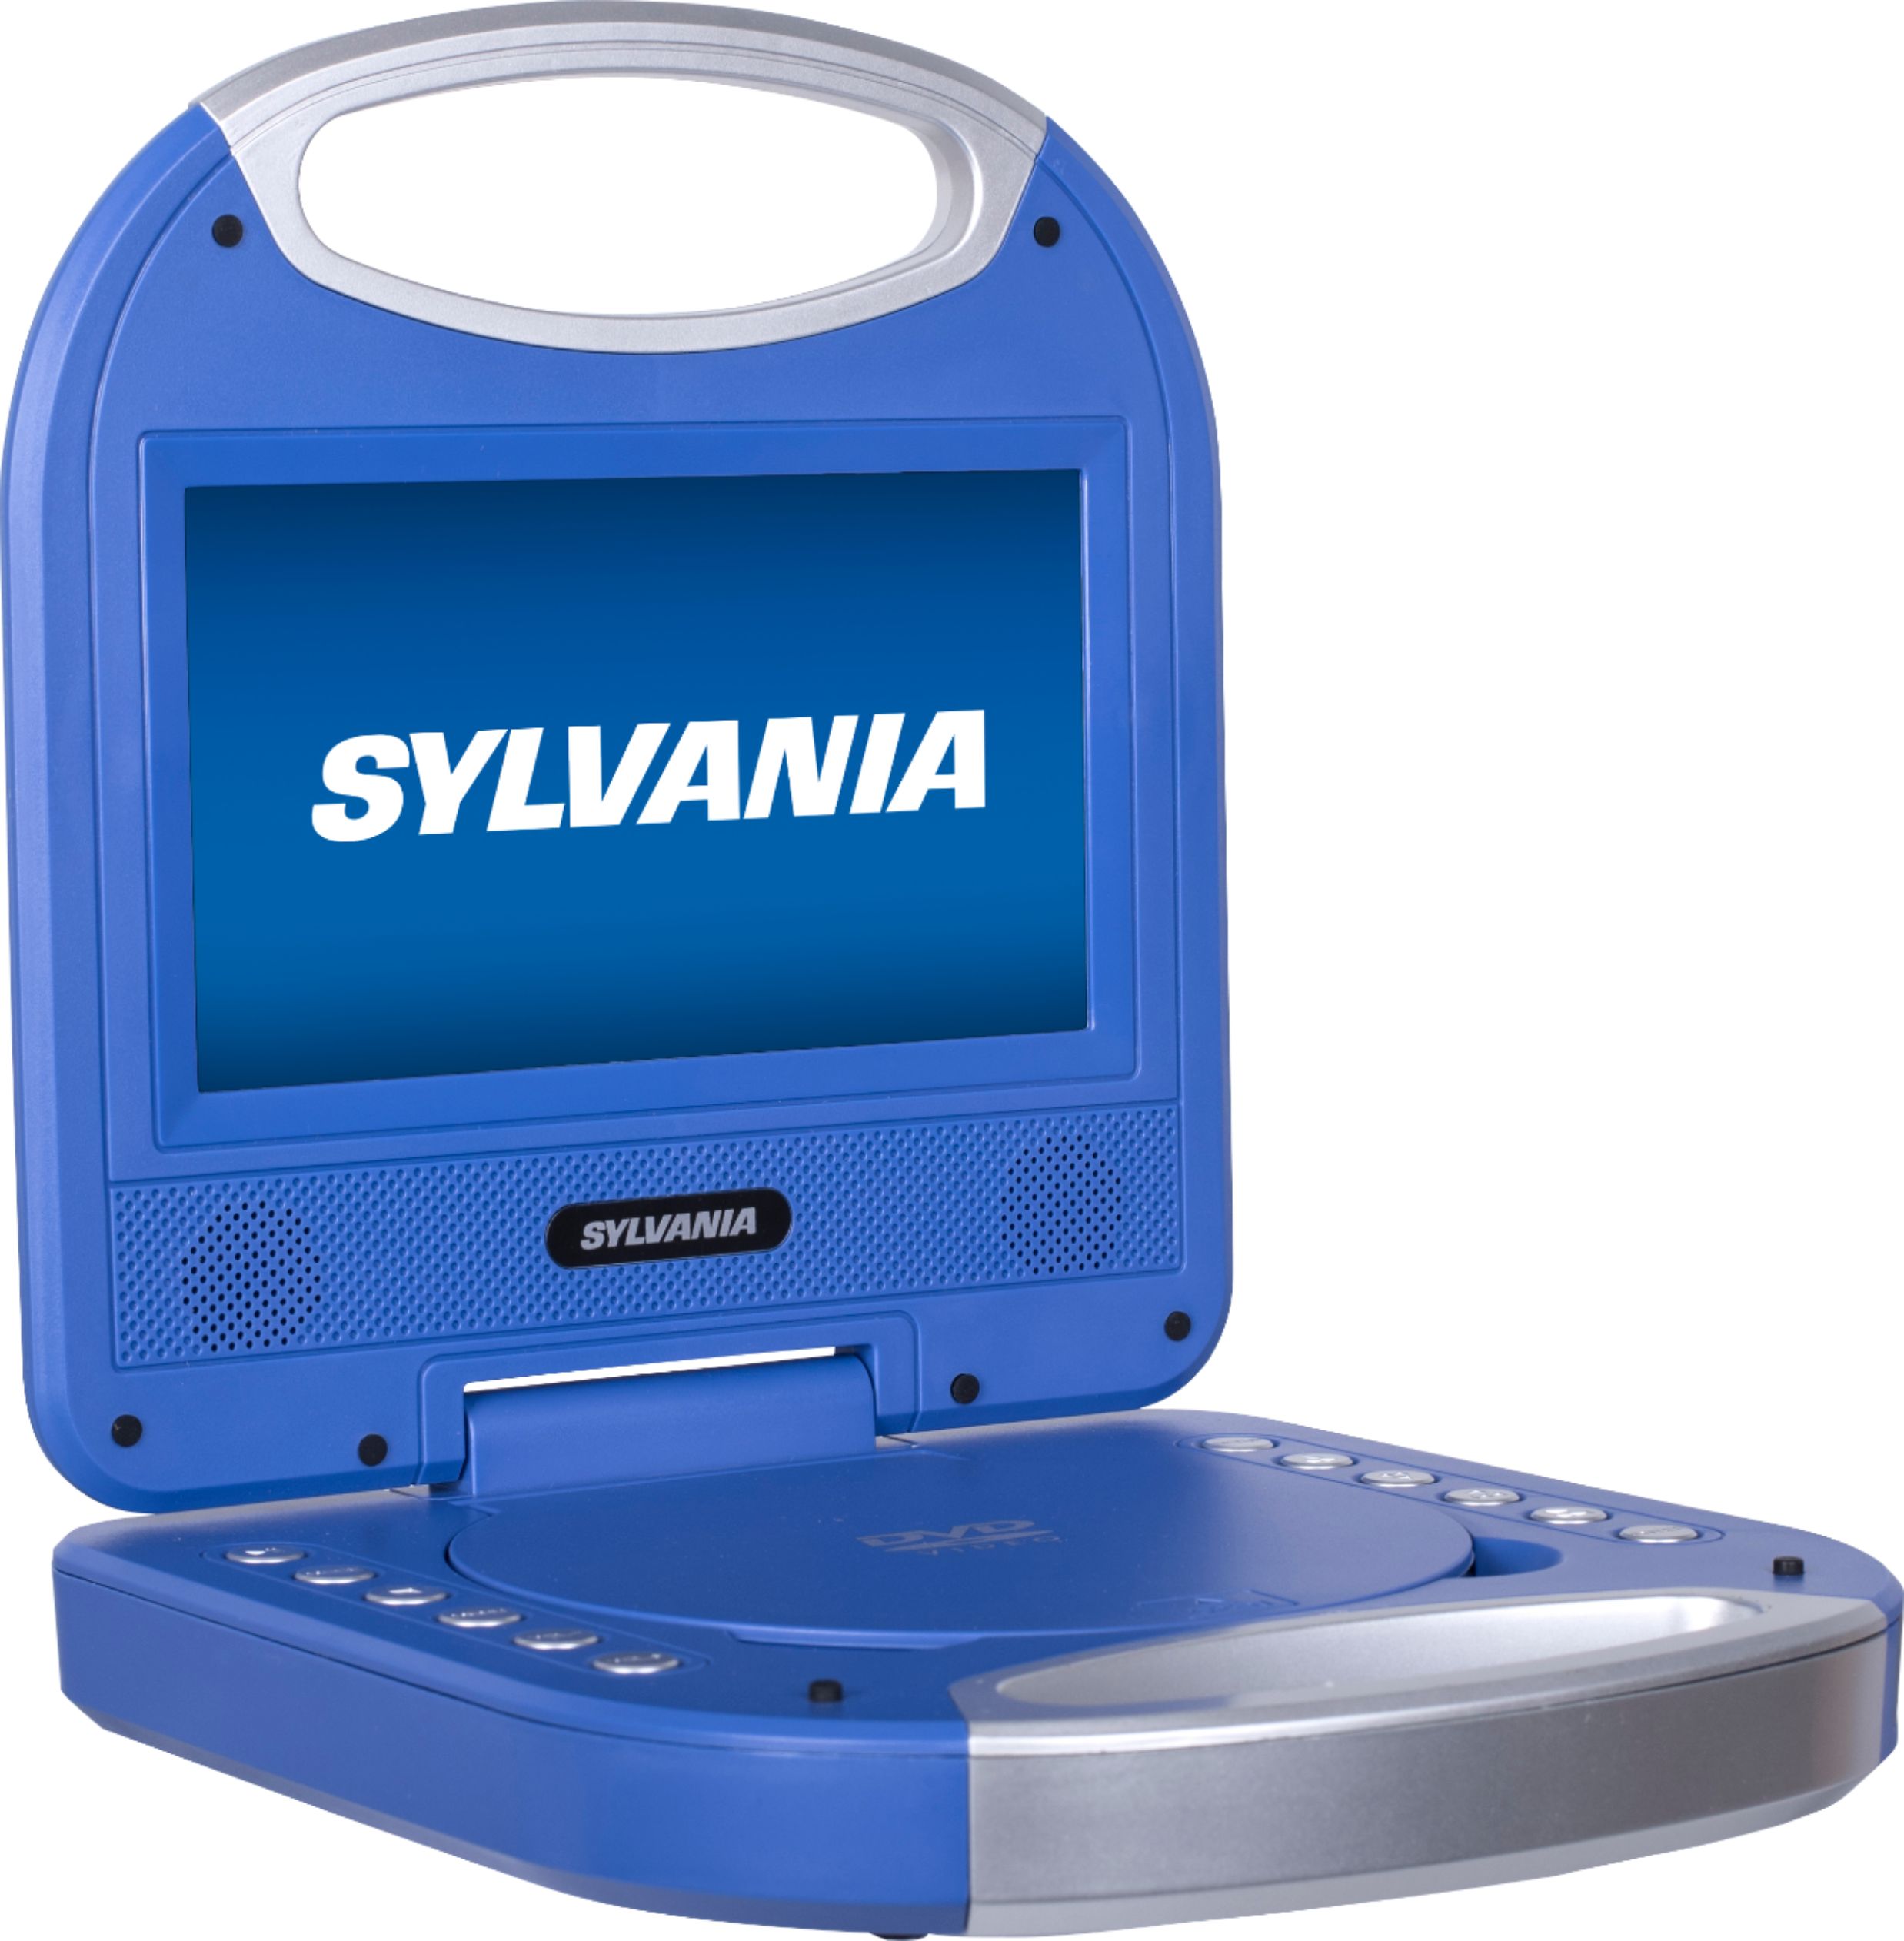 Angle View: Curtis - SYLVANIA 7" Portable DVD Player - Blue